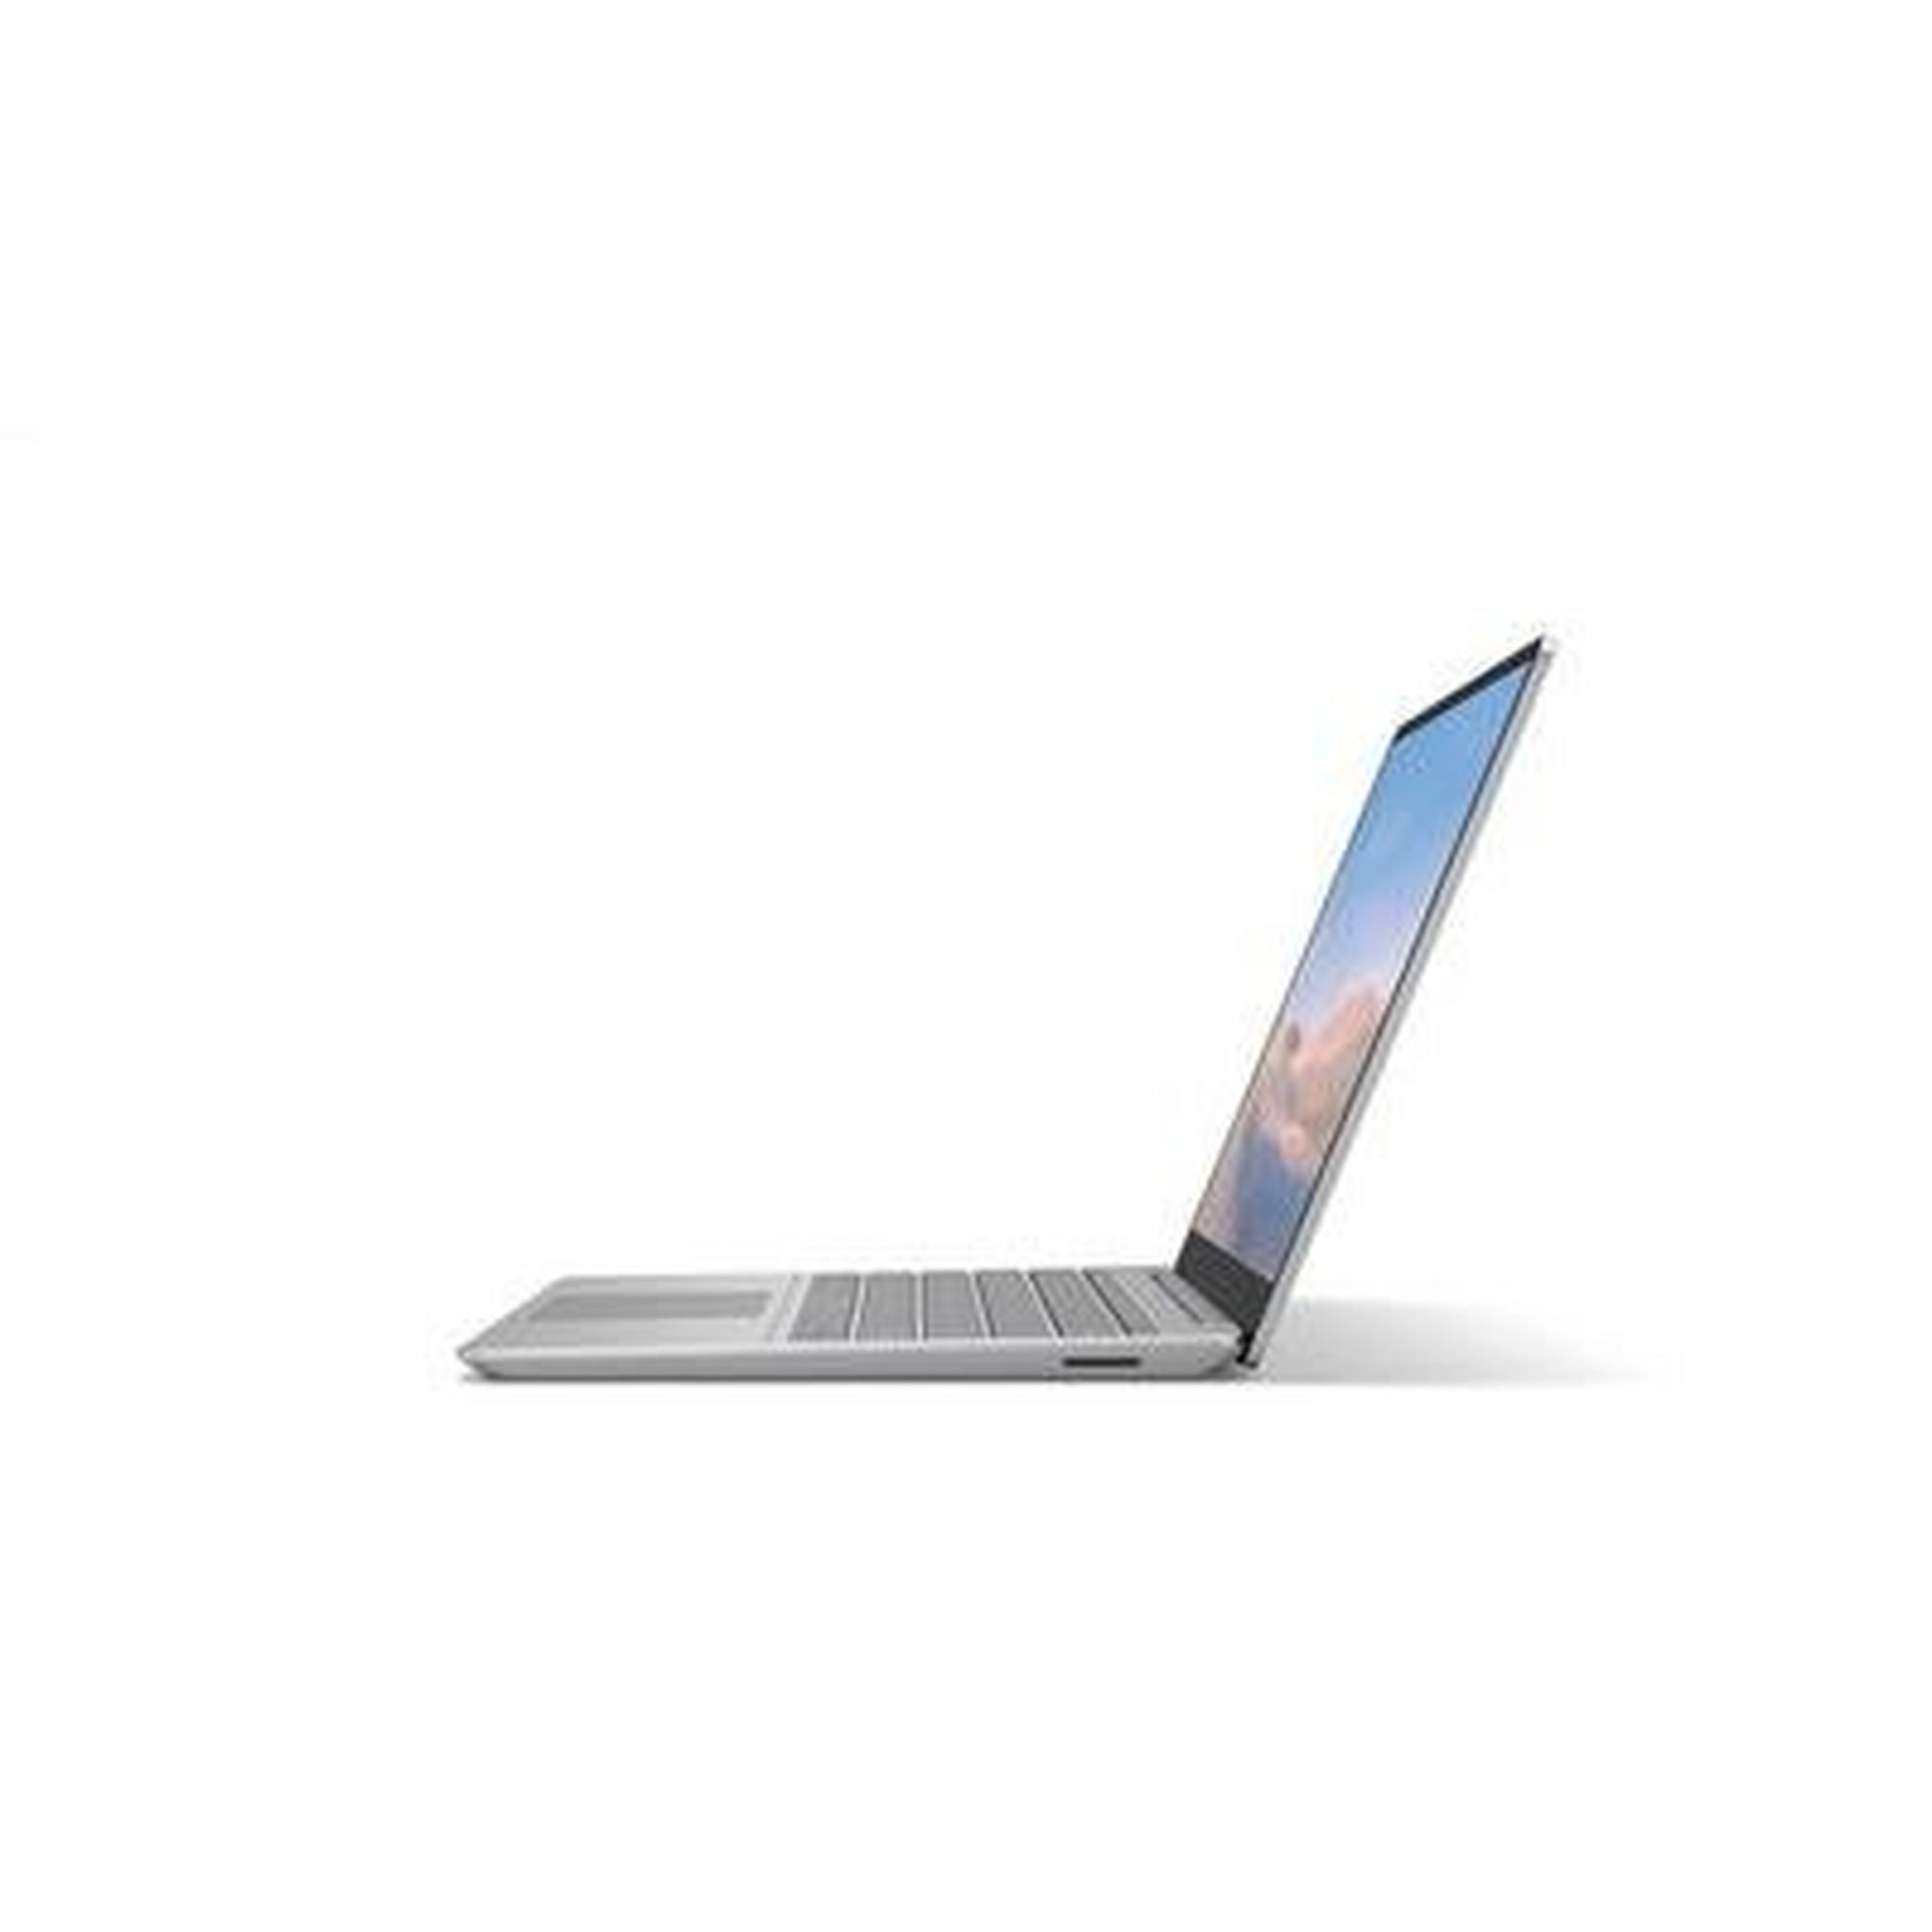 Microsoft Surface Laptop Go Intel Core i5 RAM 4GB 64GB SSD Laptop - Platinum